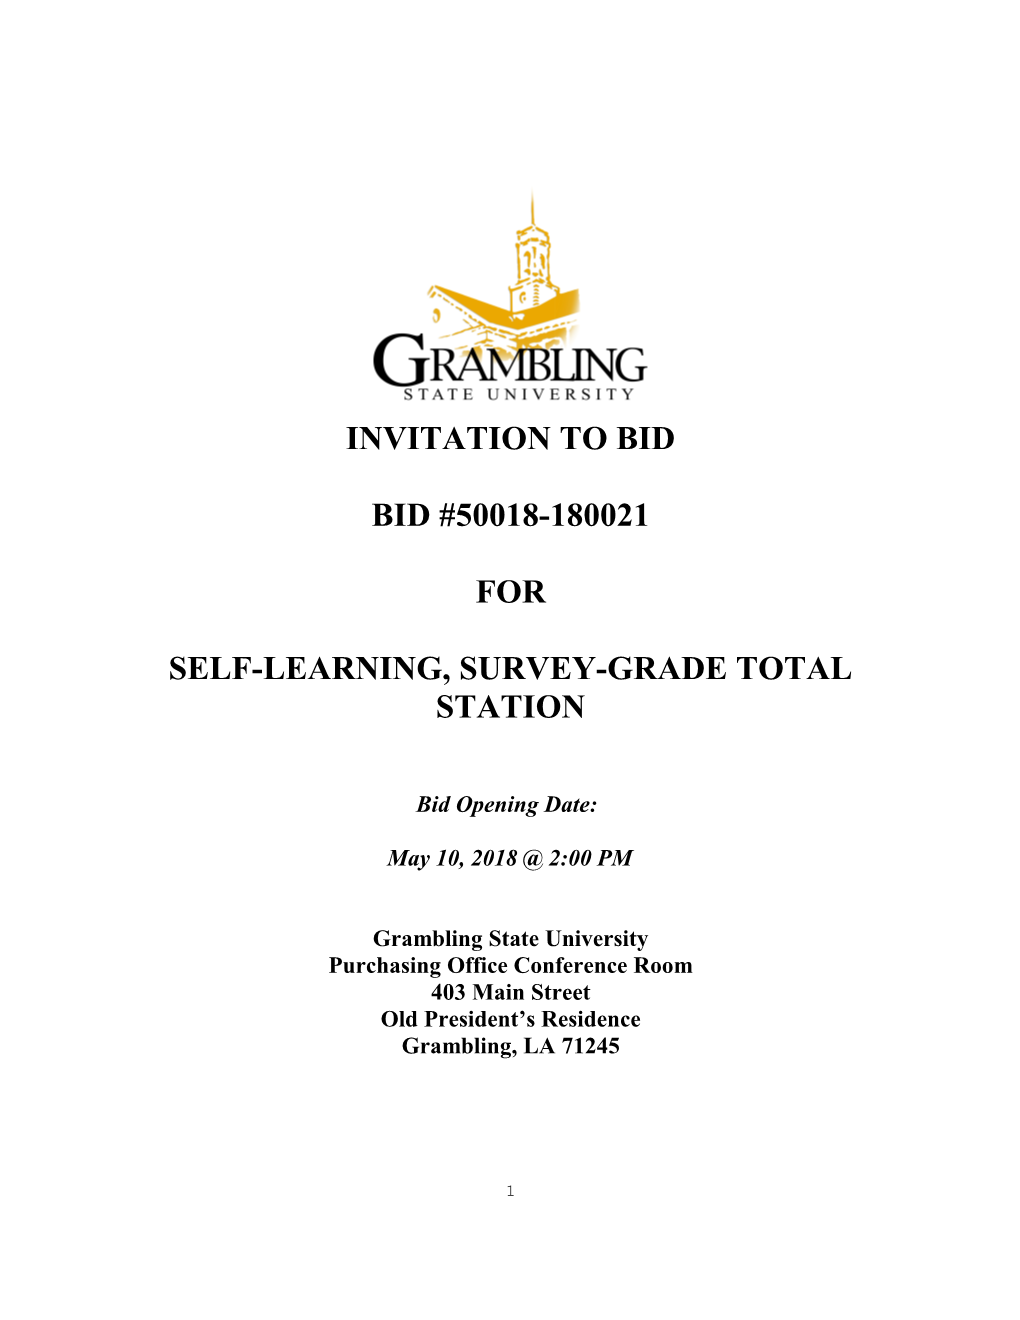 Self-Learning, Survey-Grade Total Station